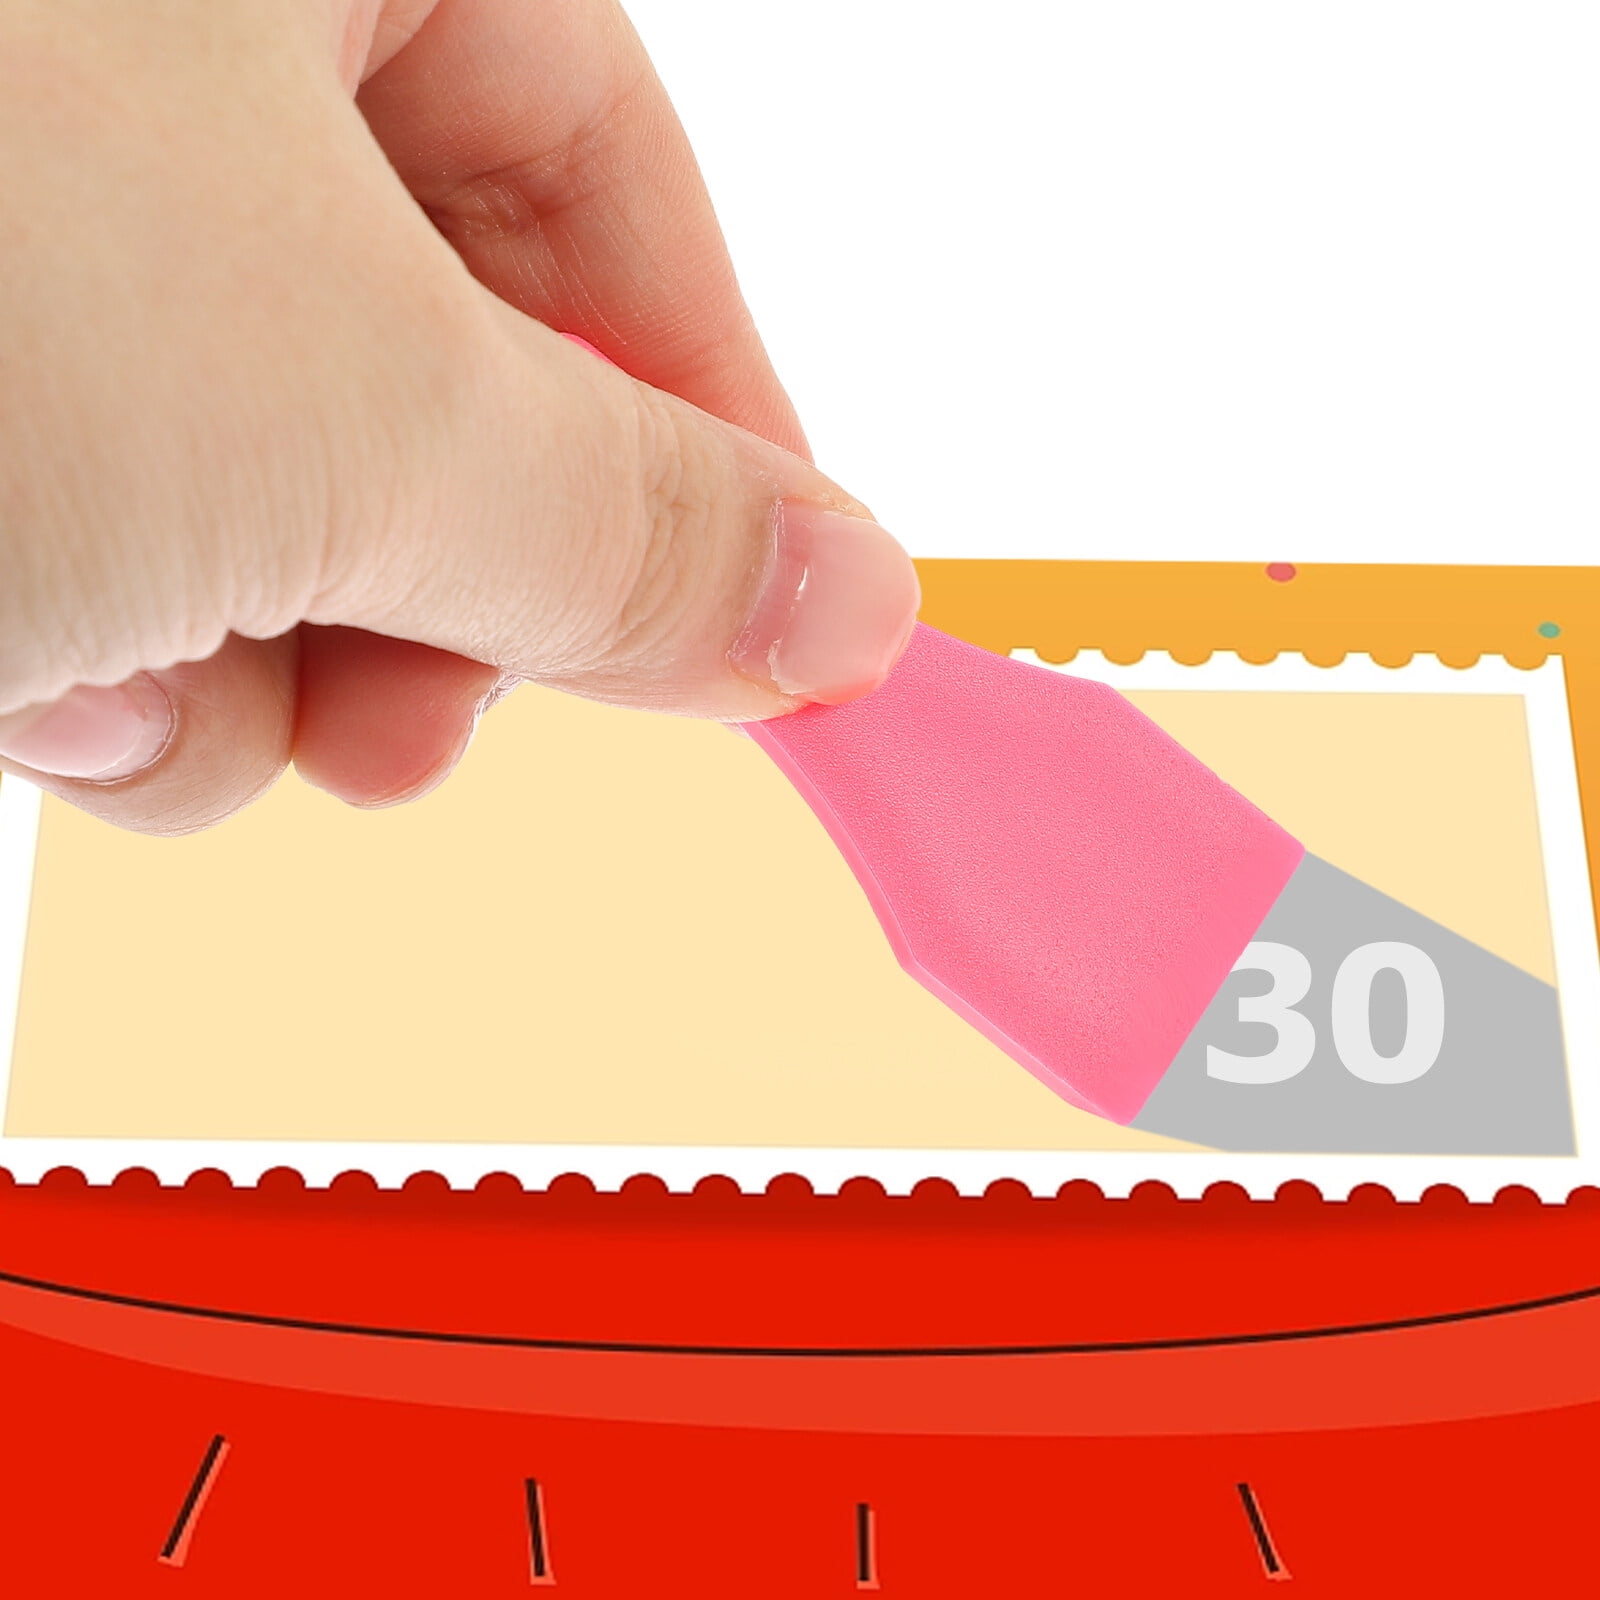 Frcolor 10pcs Lottery Ticket Scratcher Tool Portable Sticker Label Remover  Tool Plastic Scraper Tool 